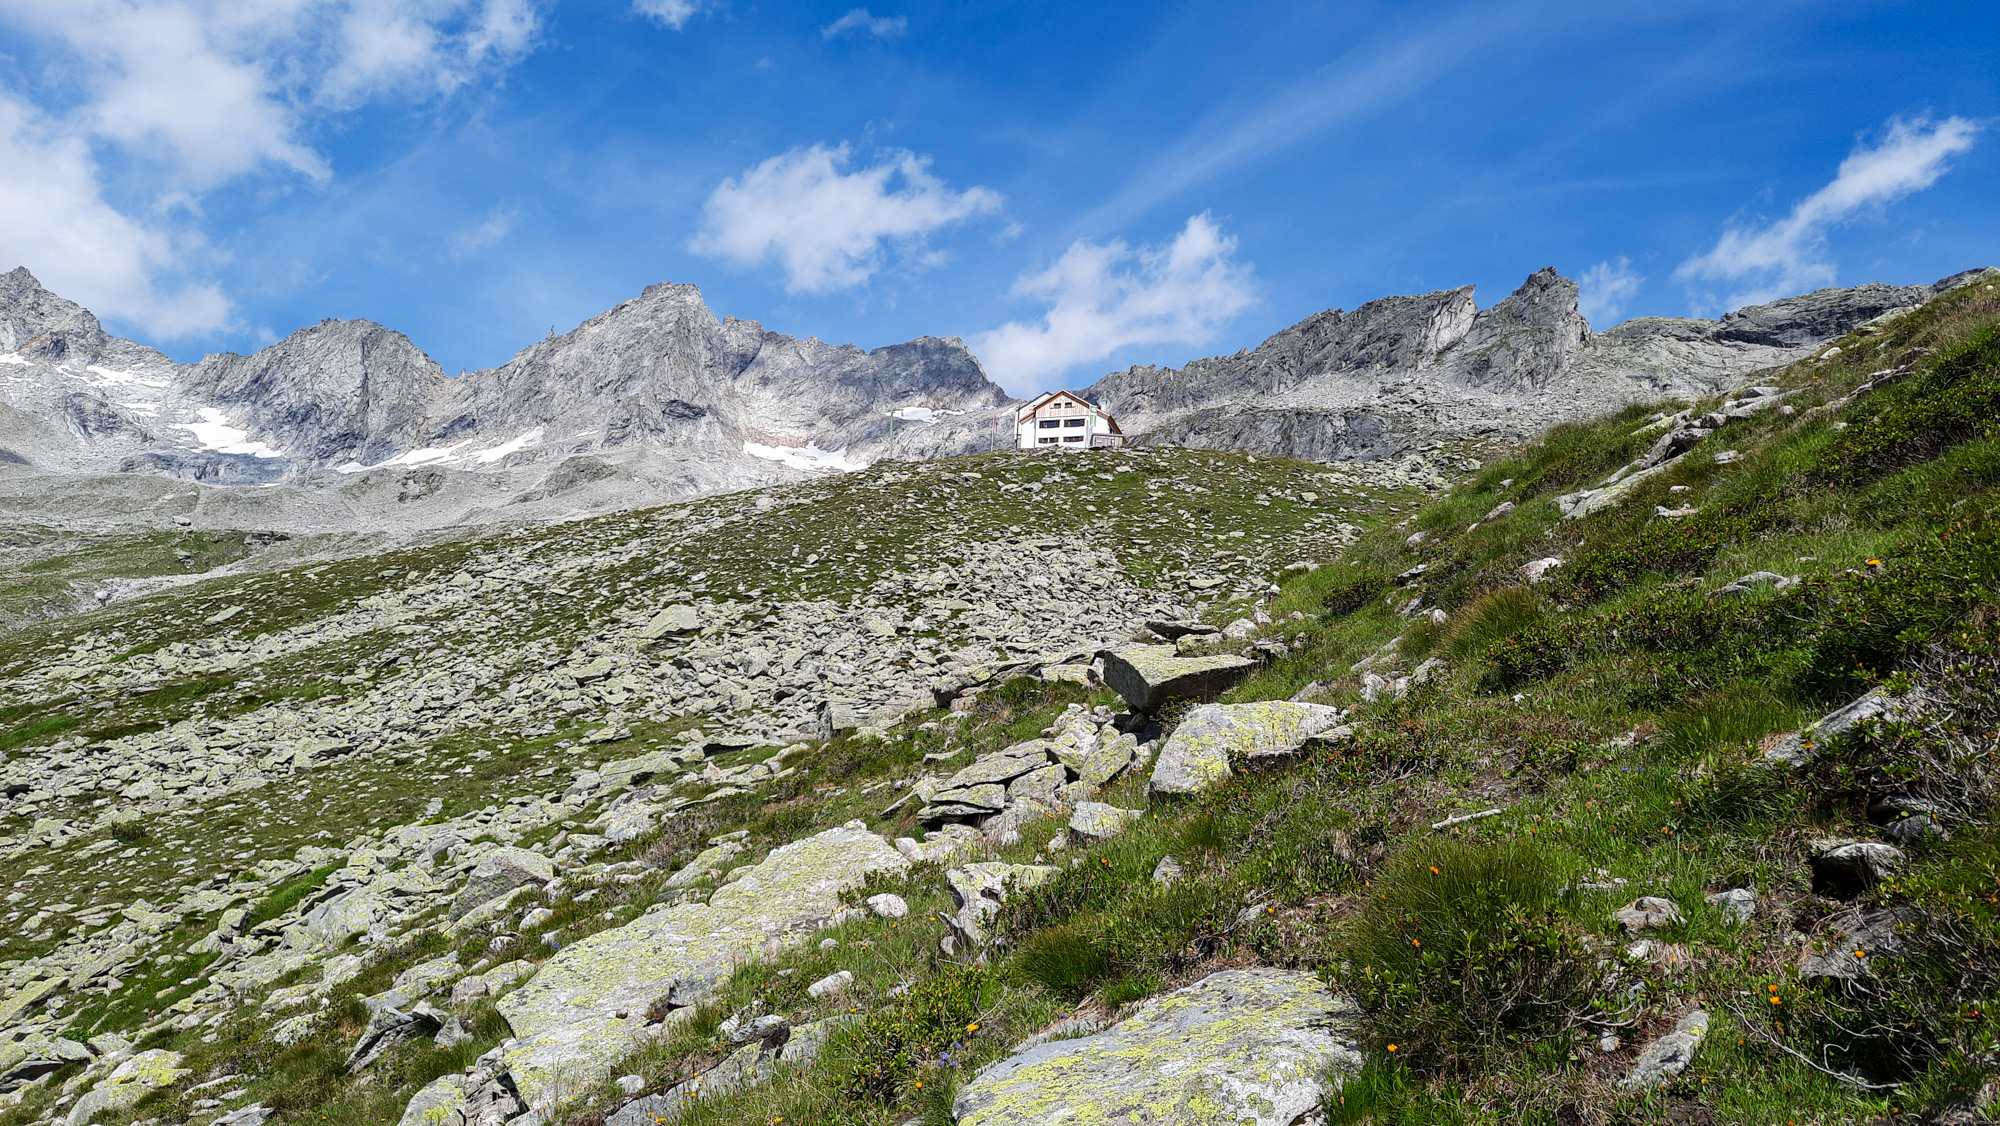 Stúpanie k Plauner Hütte. Vrchy (zľava) Zillerspitze, Richterspitze, severný a južný Schwarzkopf a Rainbachkopfl.